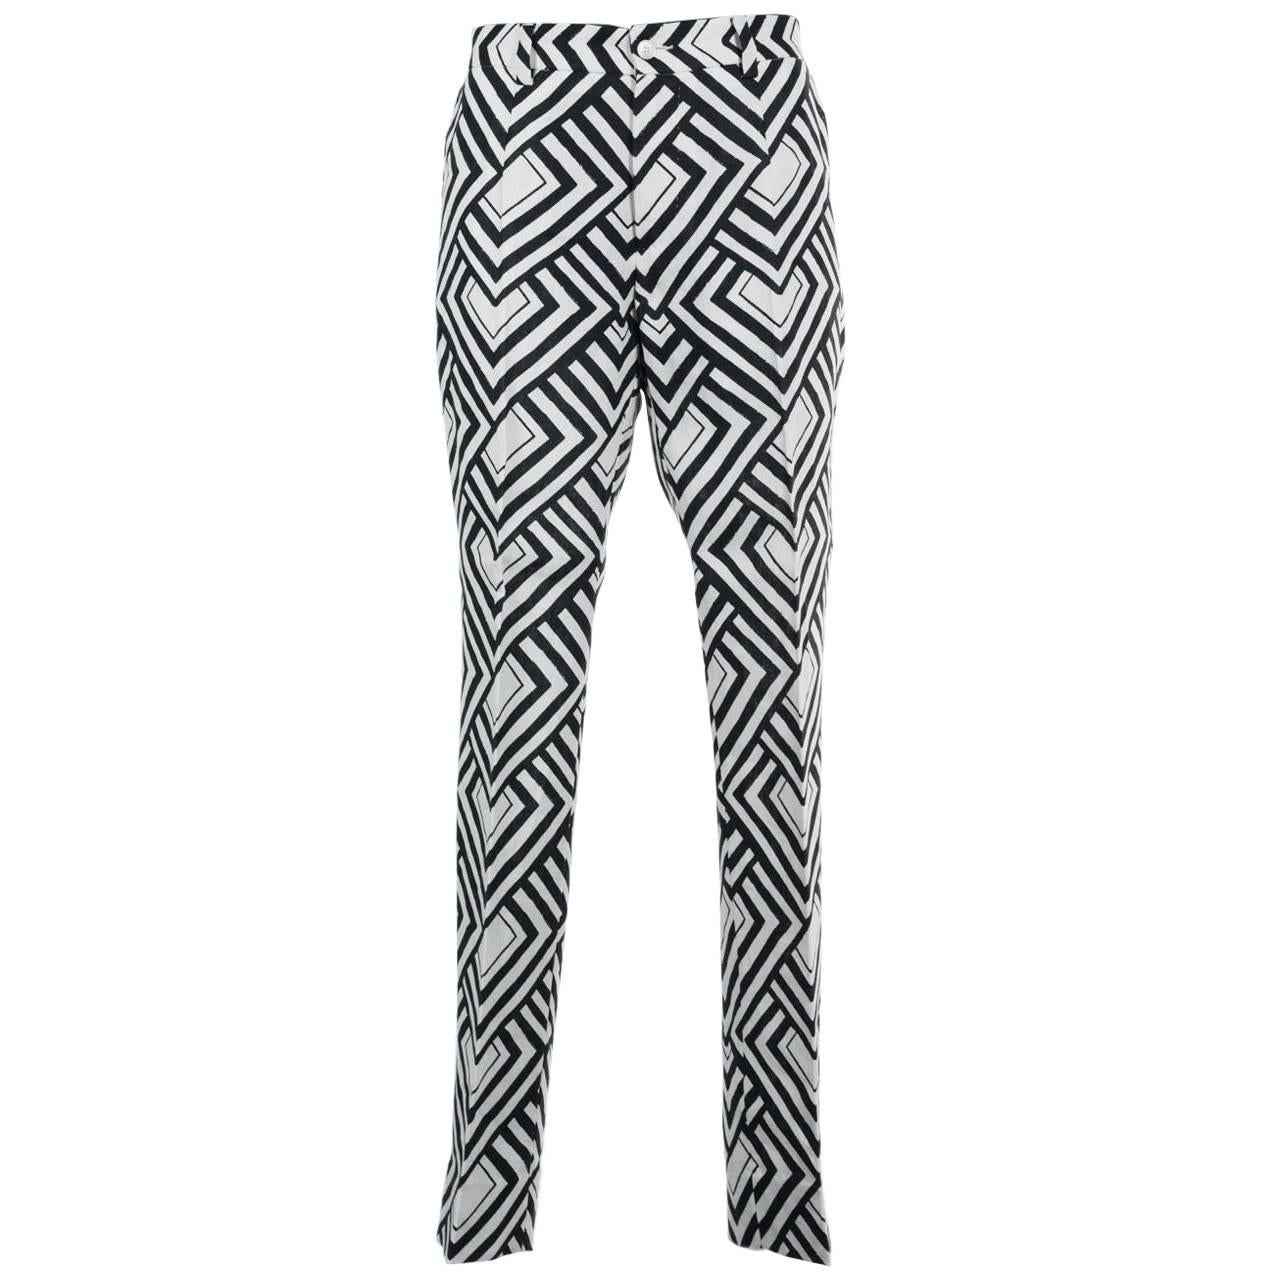 Dolce&Gabbana Men's Black & White Printed Linen Pants